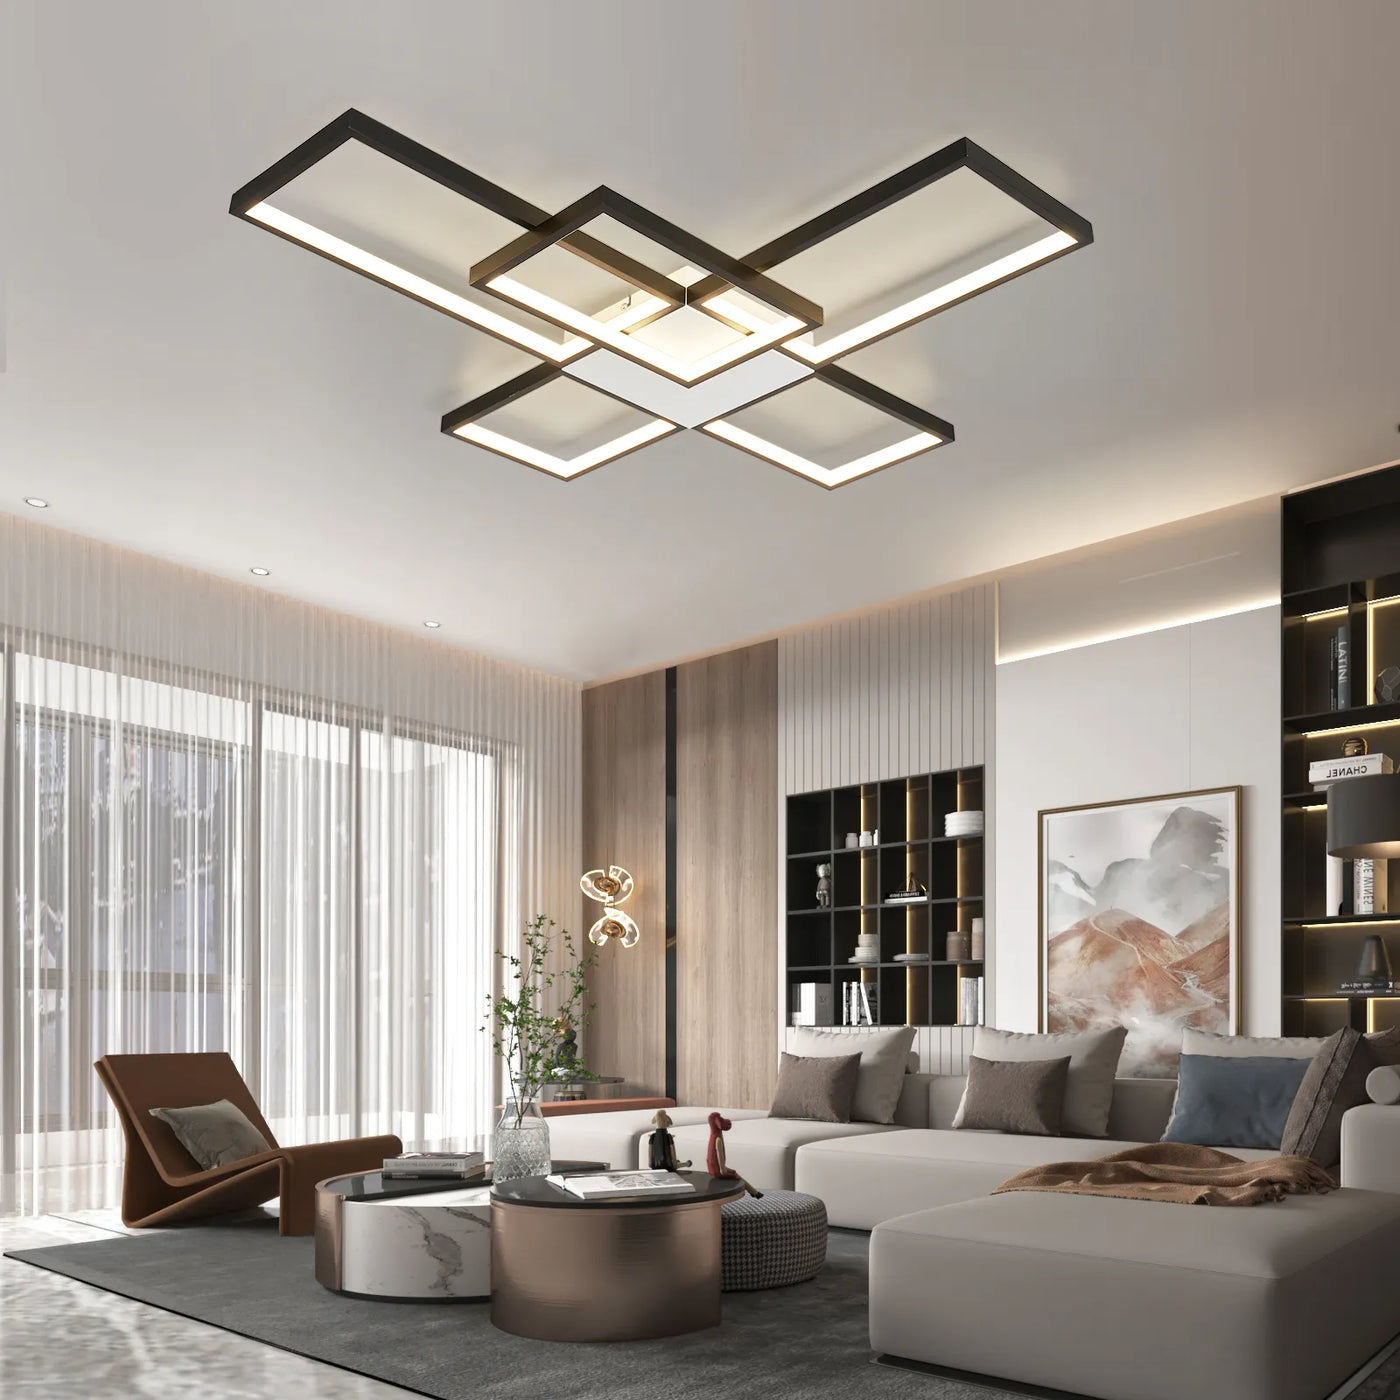 Modern LED Ceiling Lights Living Room Lustre Home Decor Dimmable Black/Gold Ceiling Lamp Fixtures